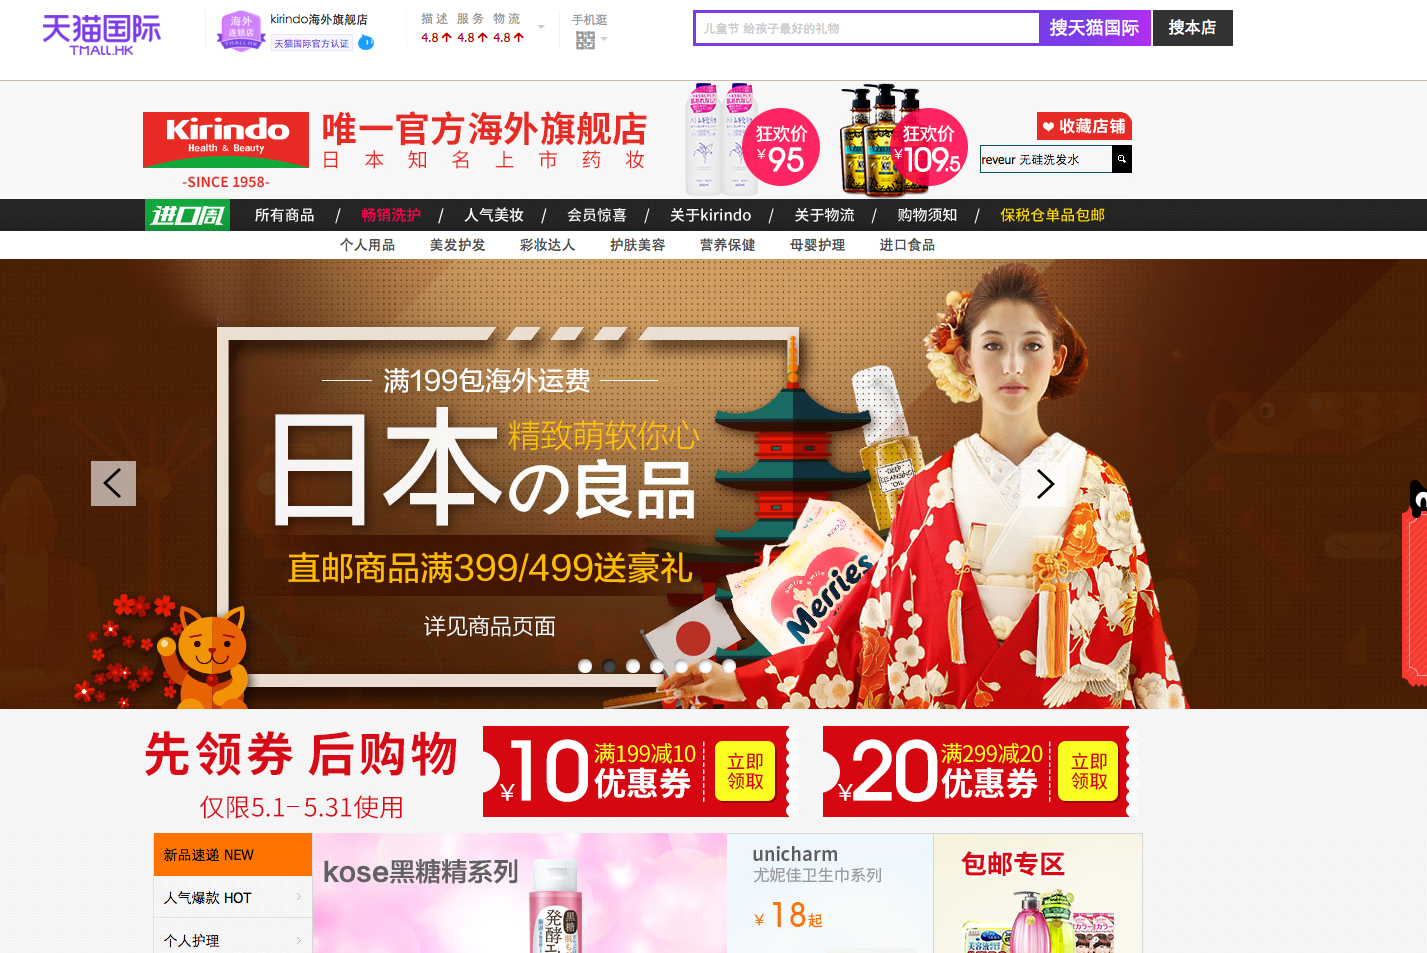 Japan brand China eCommerce